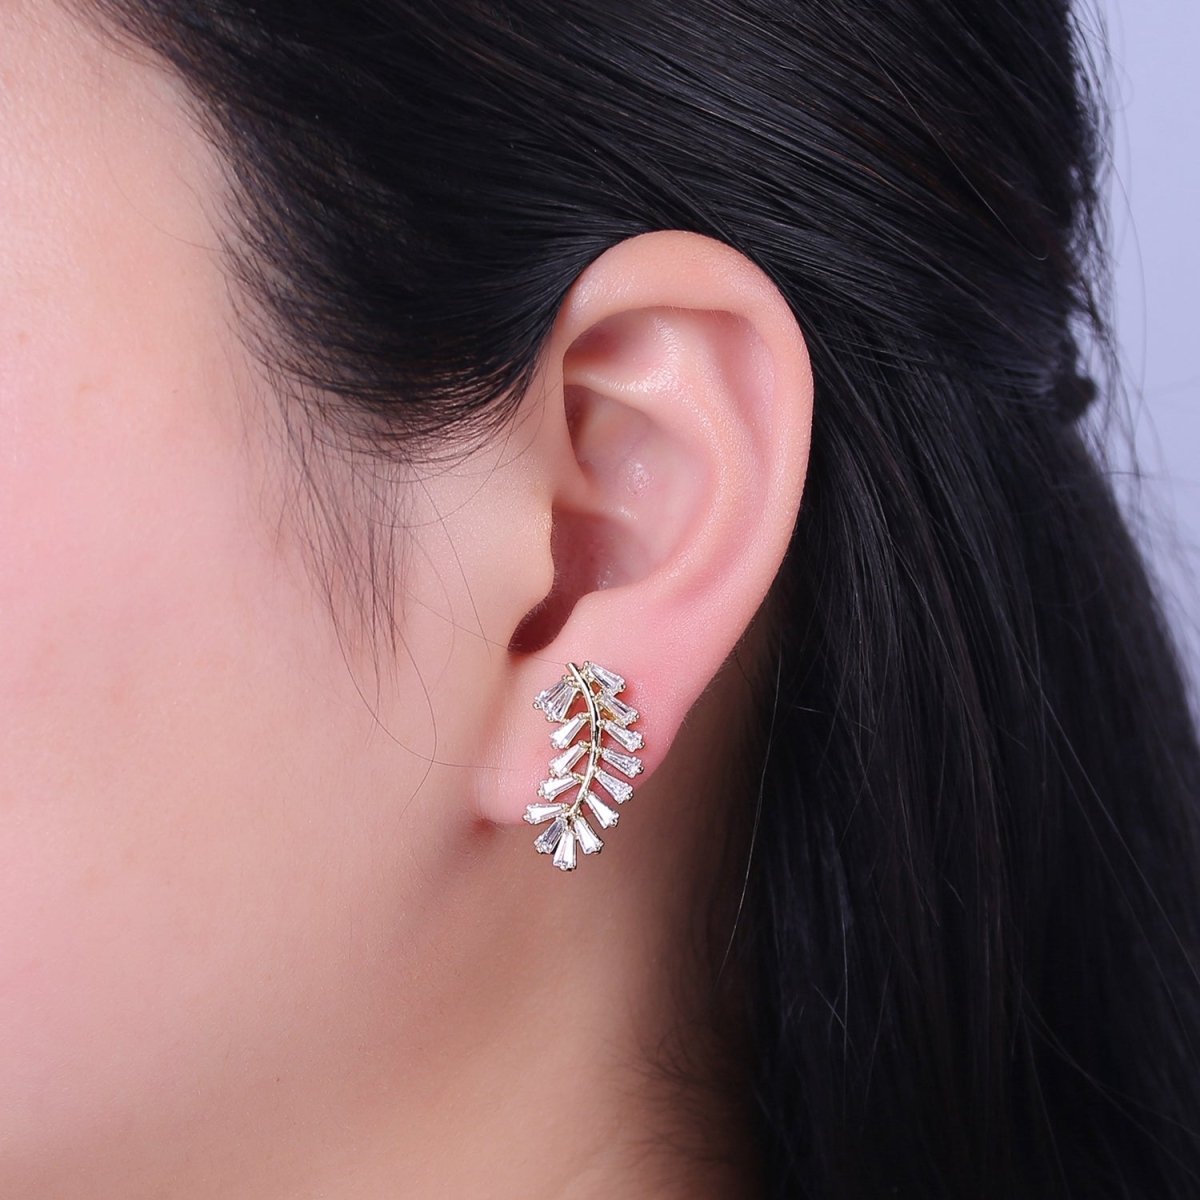 Dainty Gold Olive Leaf Earring Stud Earrings, Ear Climber, Delicate Earrings, Minimalist, Edgy Earrings CZ Cubic Simple earring Gift for Her V-159 - DLUXCA